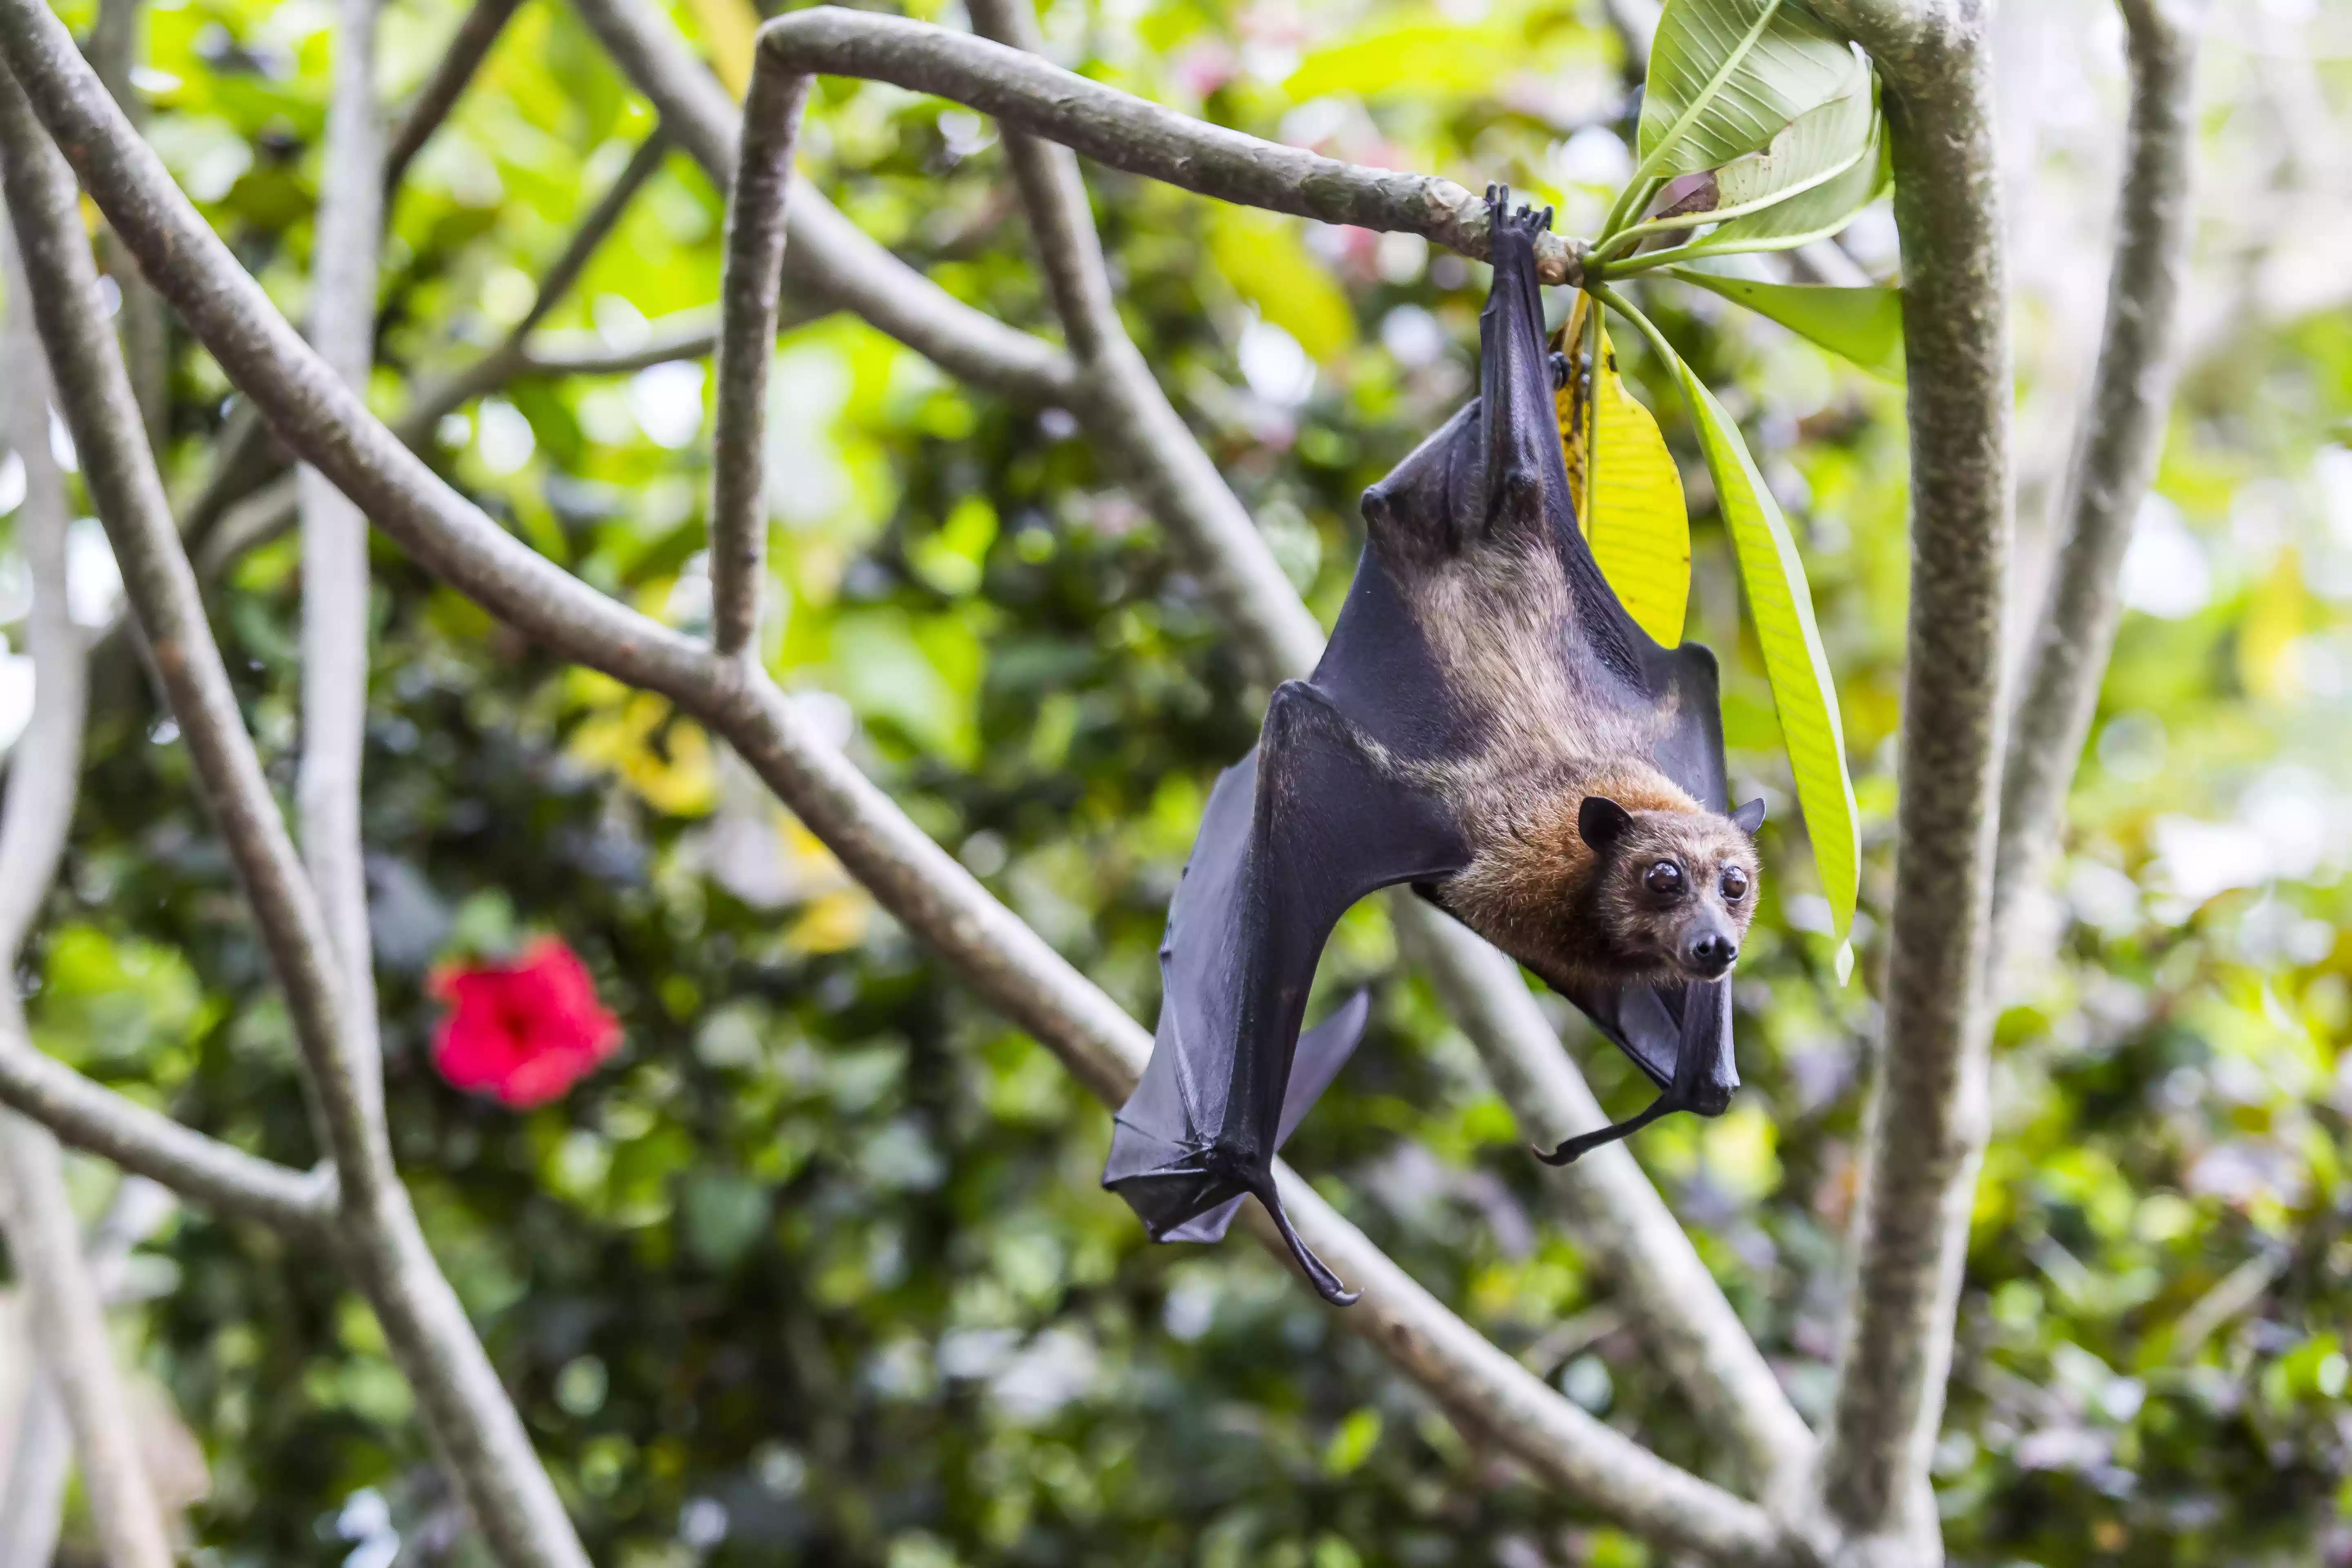 Fruit bat hanging from tree, Bali, Indonesia